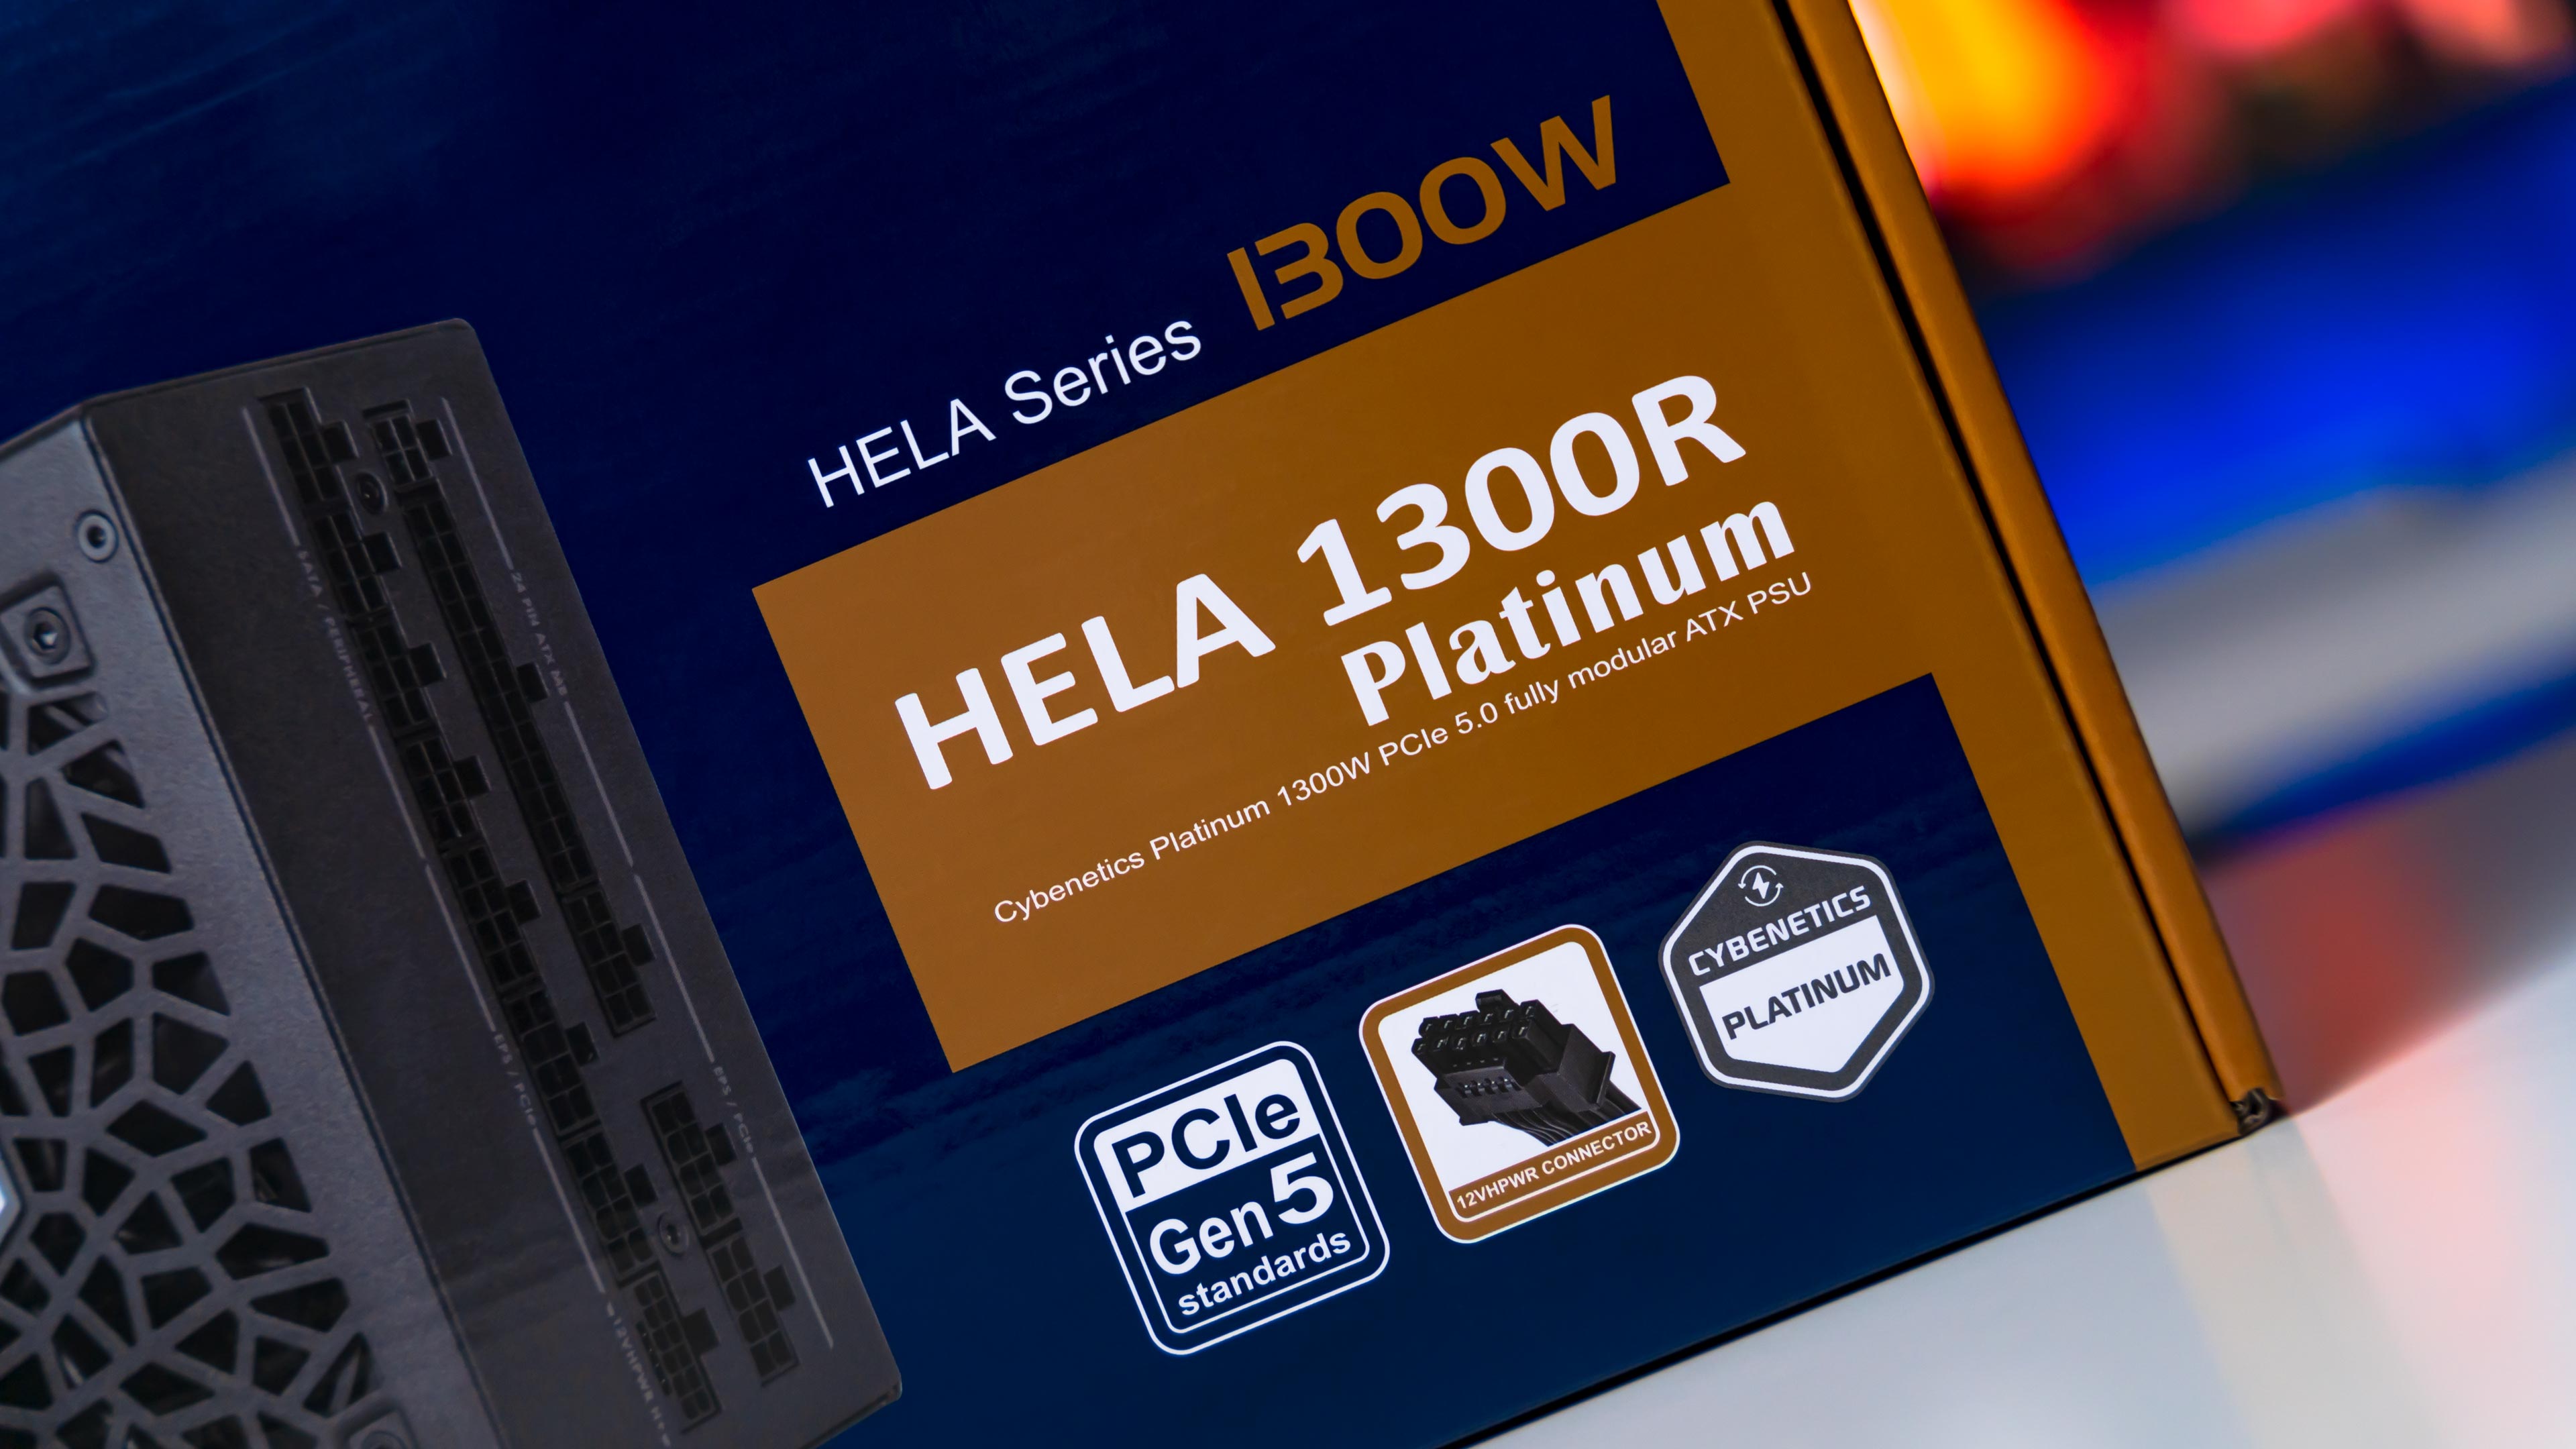 Silverstone HELA 1300R Platinum Box (2)